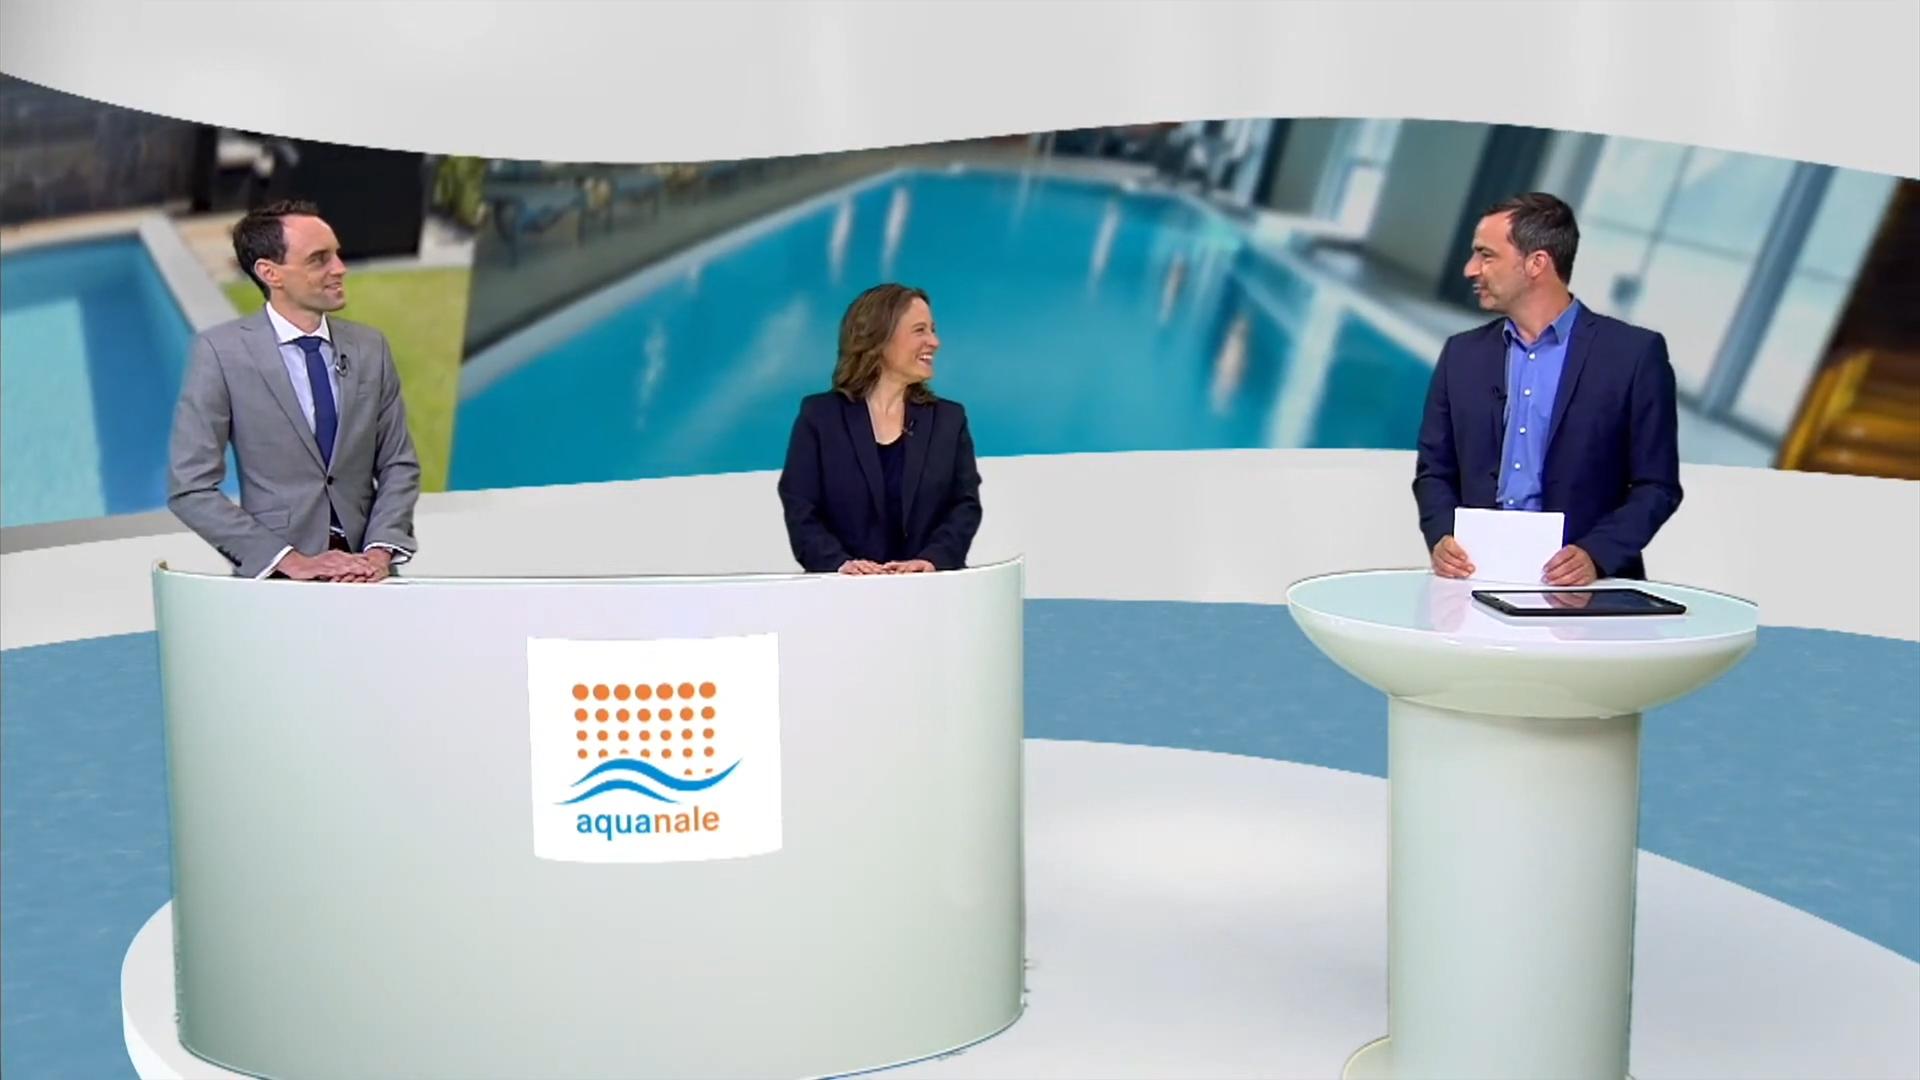 Product aquanale | make/c video content marketing GmbH image